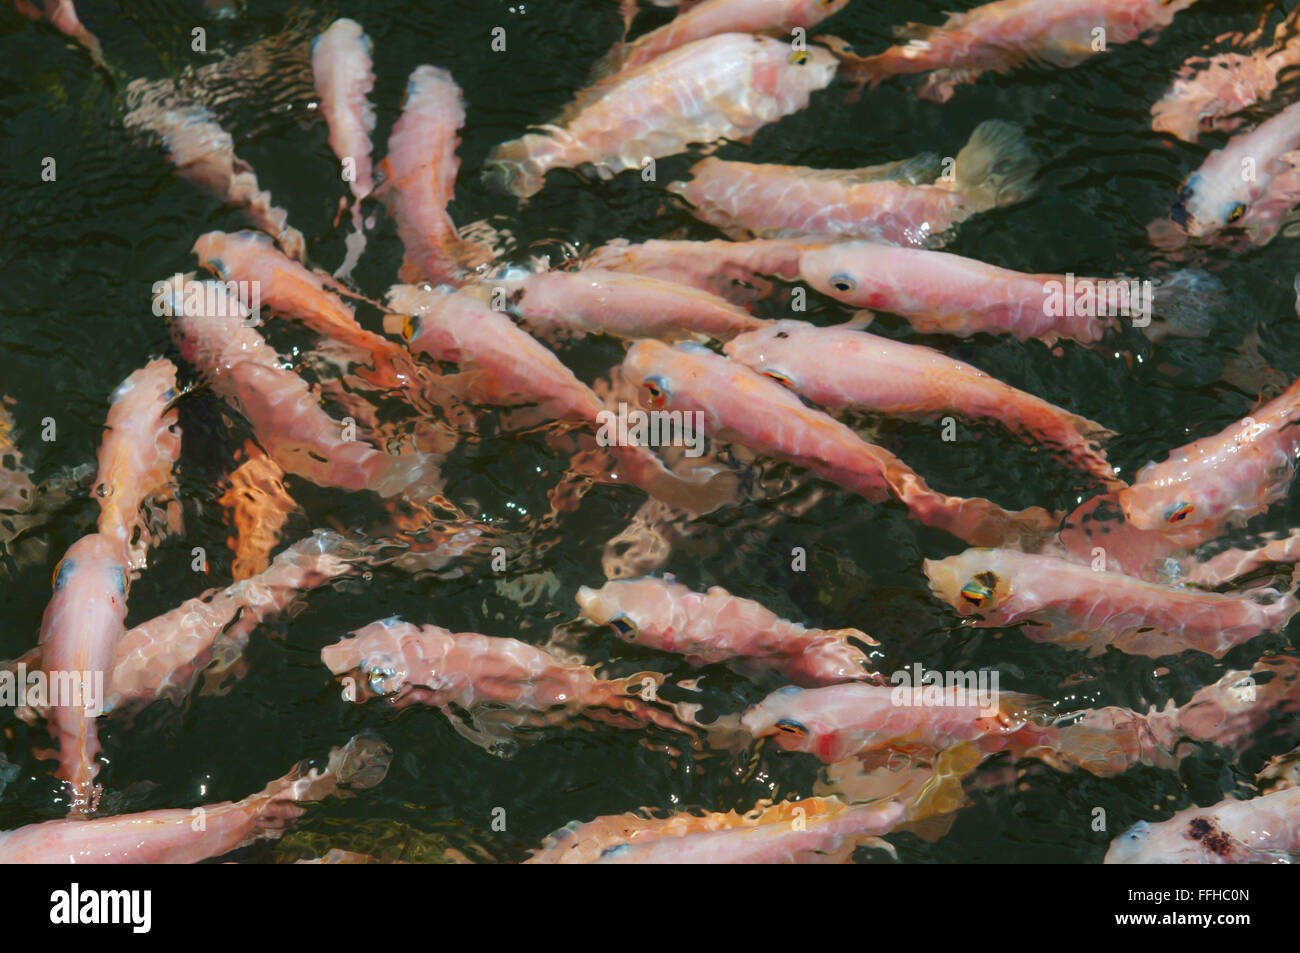 25 février 2016 - Un grand banc de poissons tilapia du Mozambique (Oreochromis mossambicus) dans une lagune d'Hikkaduwa river, Hikkaduwa, au Sri Lanka, en Asie du Sud © Andrey Nekrasov/ZUMA/ZUMAPRESS.com/Alamy fil Live News Banque D'Images